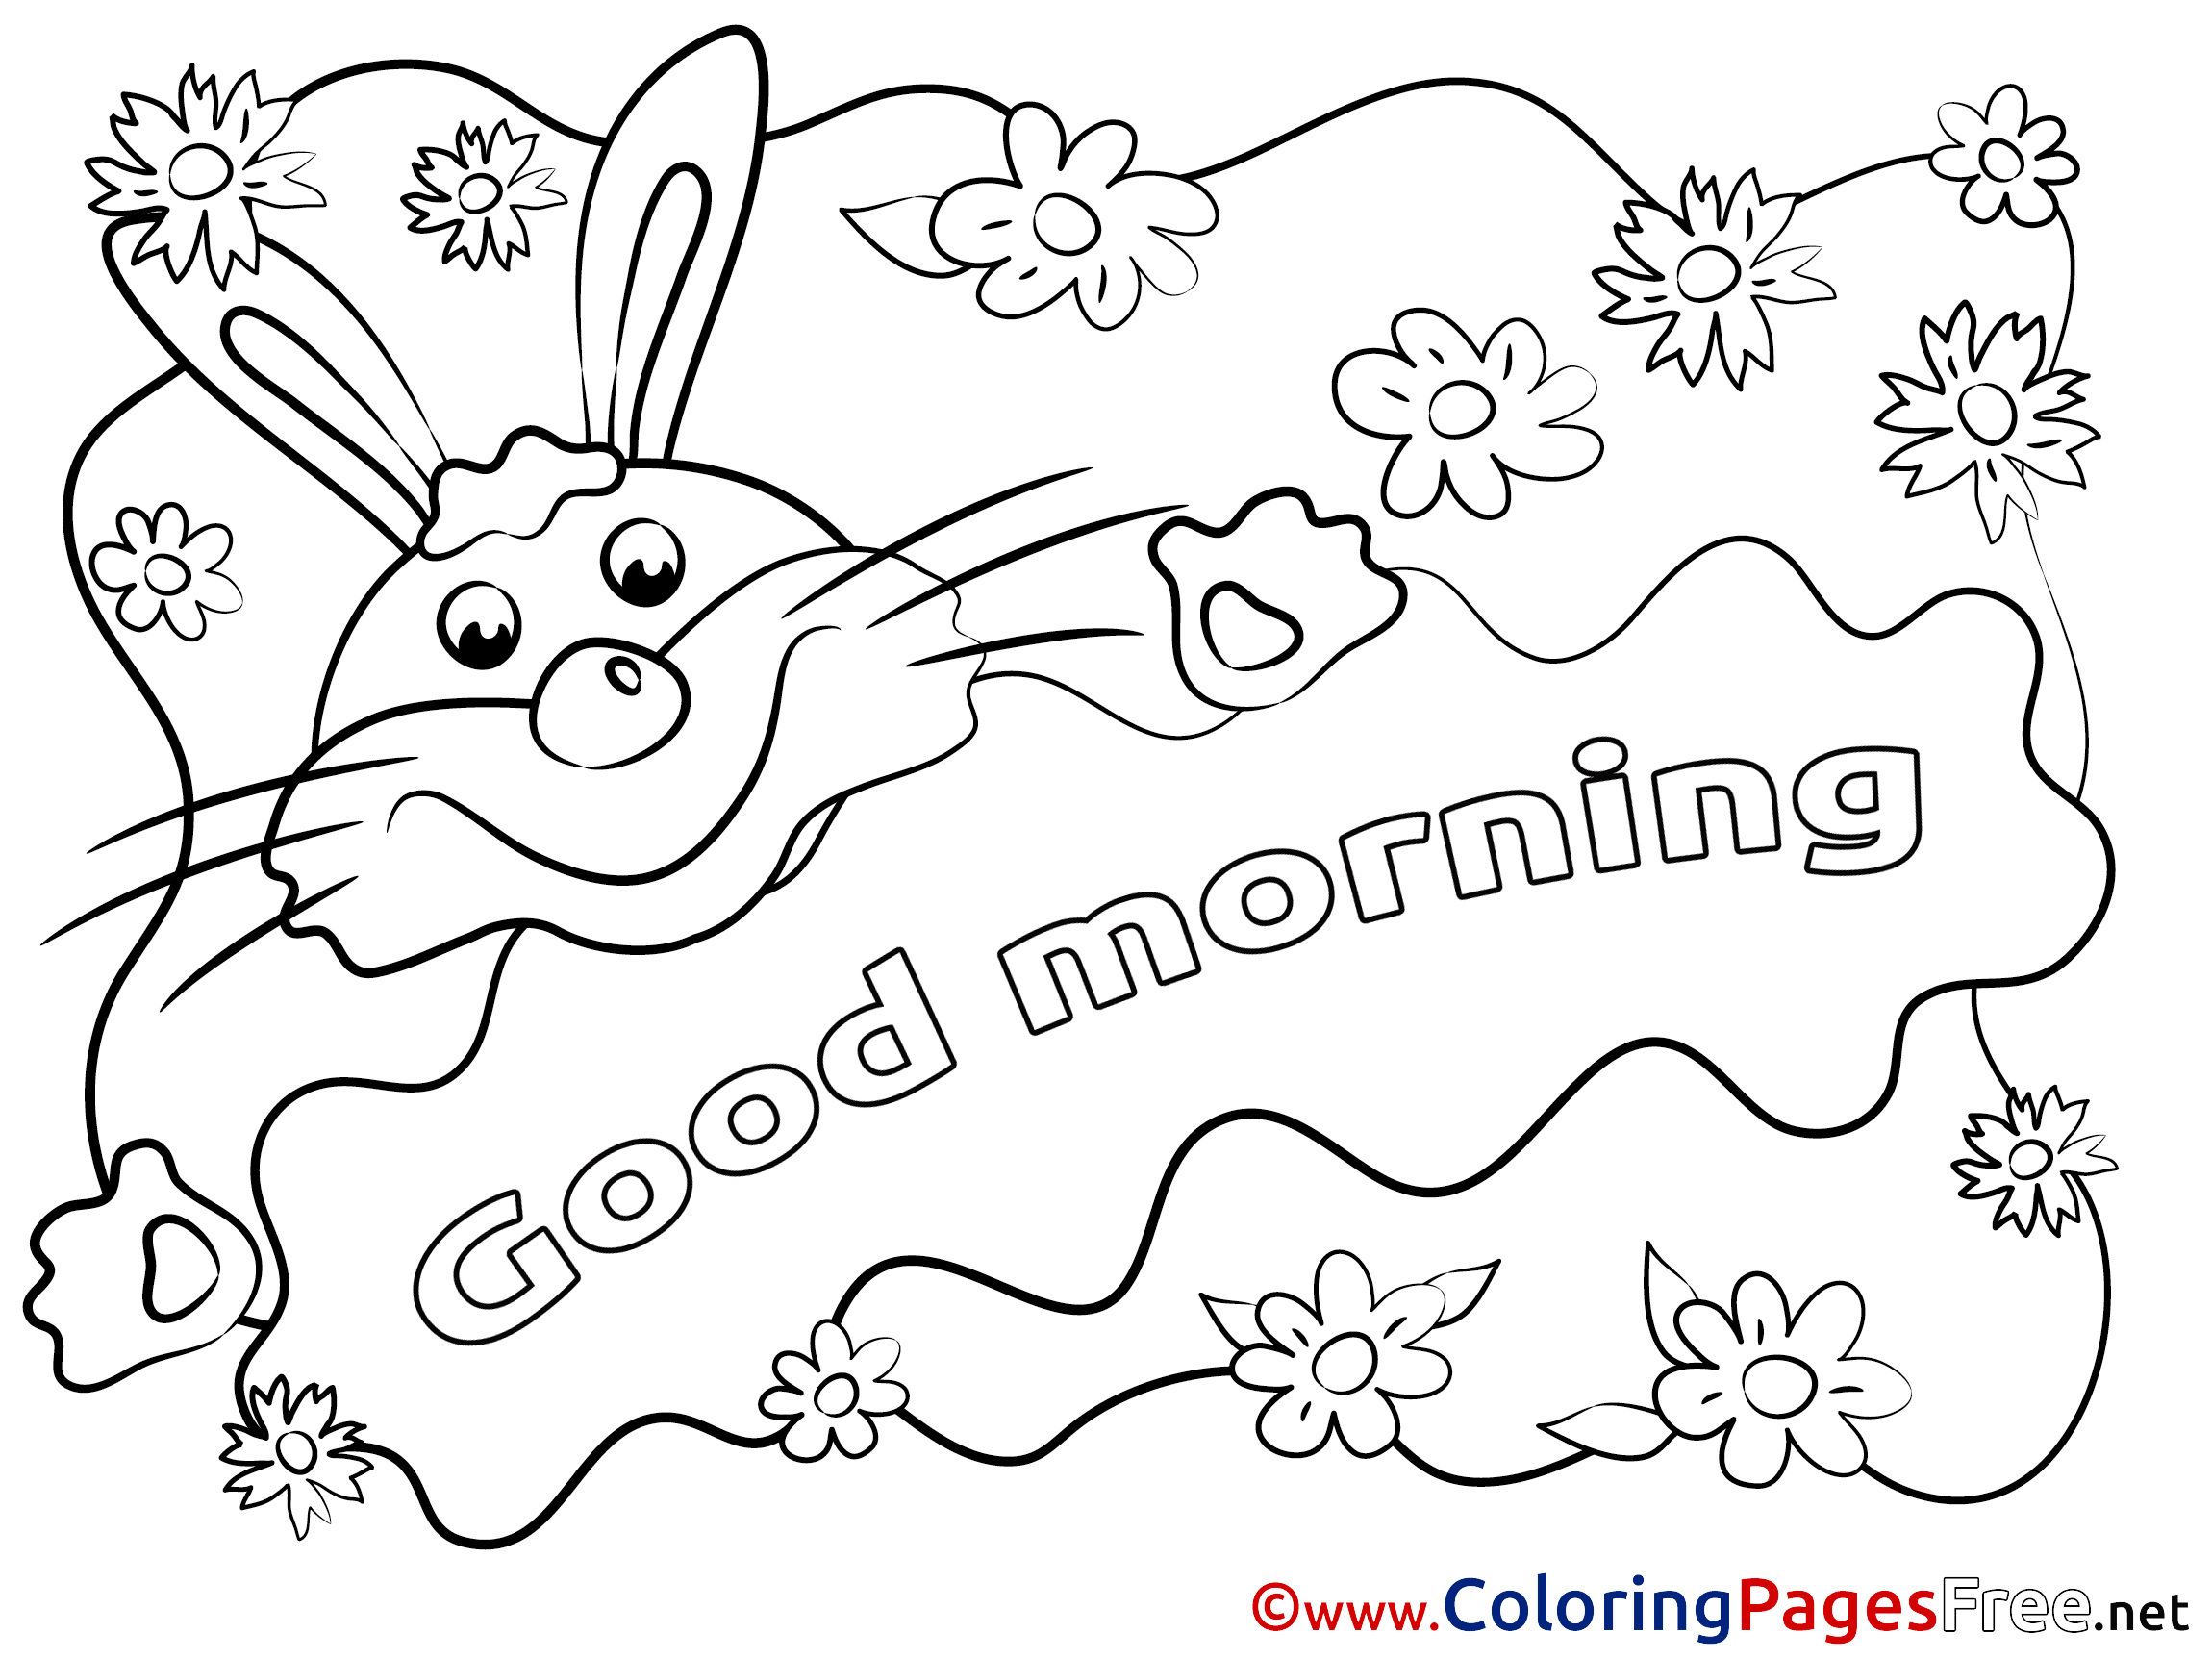 Rabbit Colouring Sheet download Good Morning